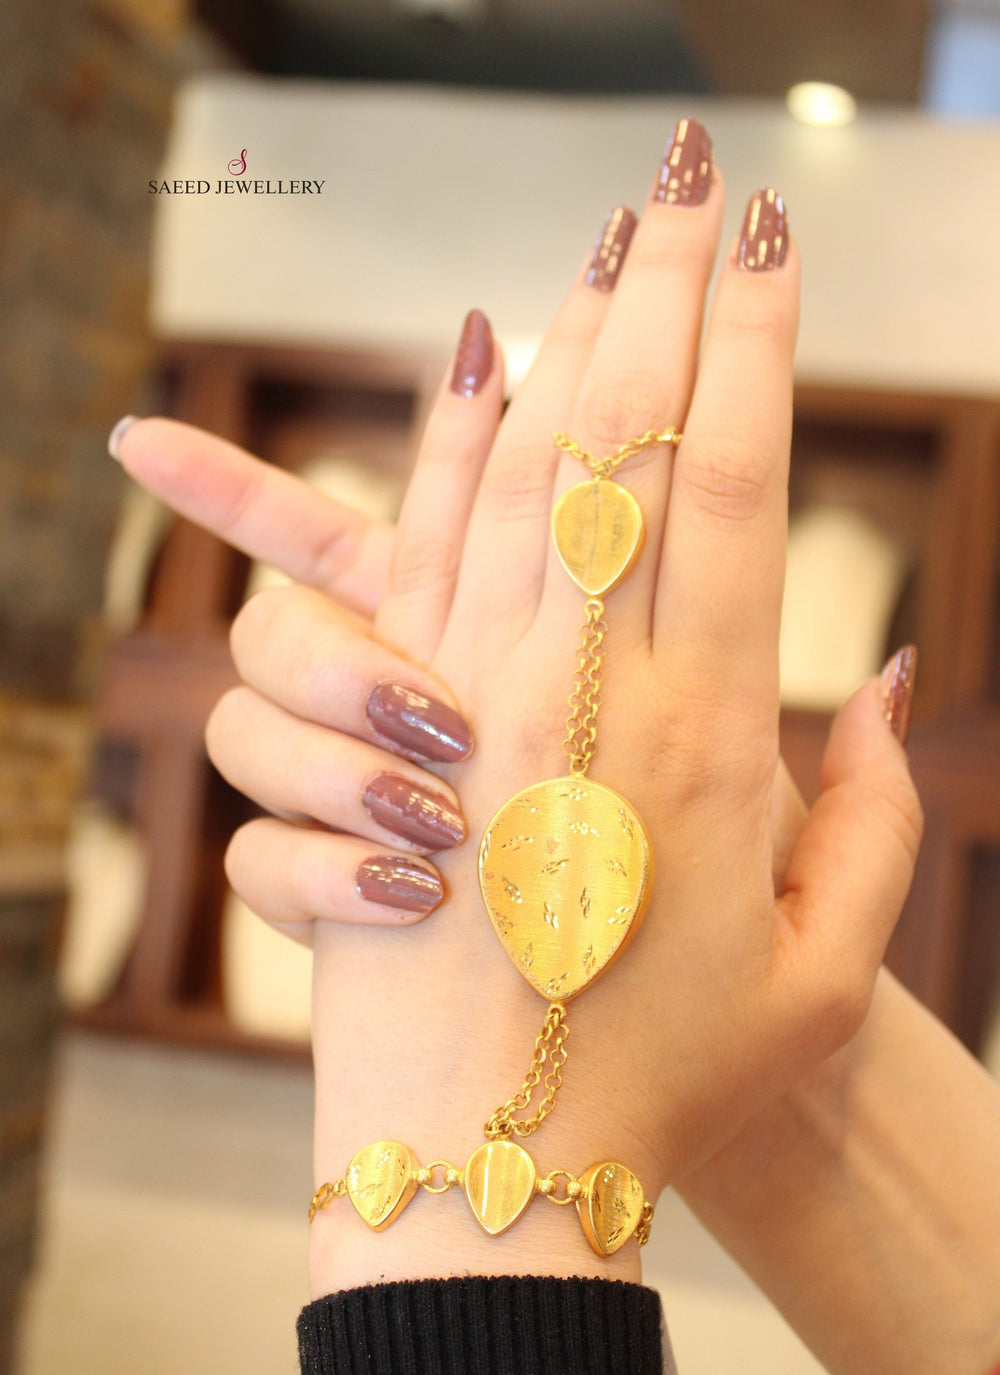 21K Gold Emirati Hand Bracelet by Saeed Jewelry - Image 2